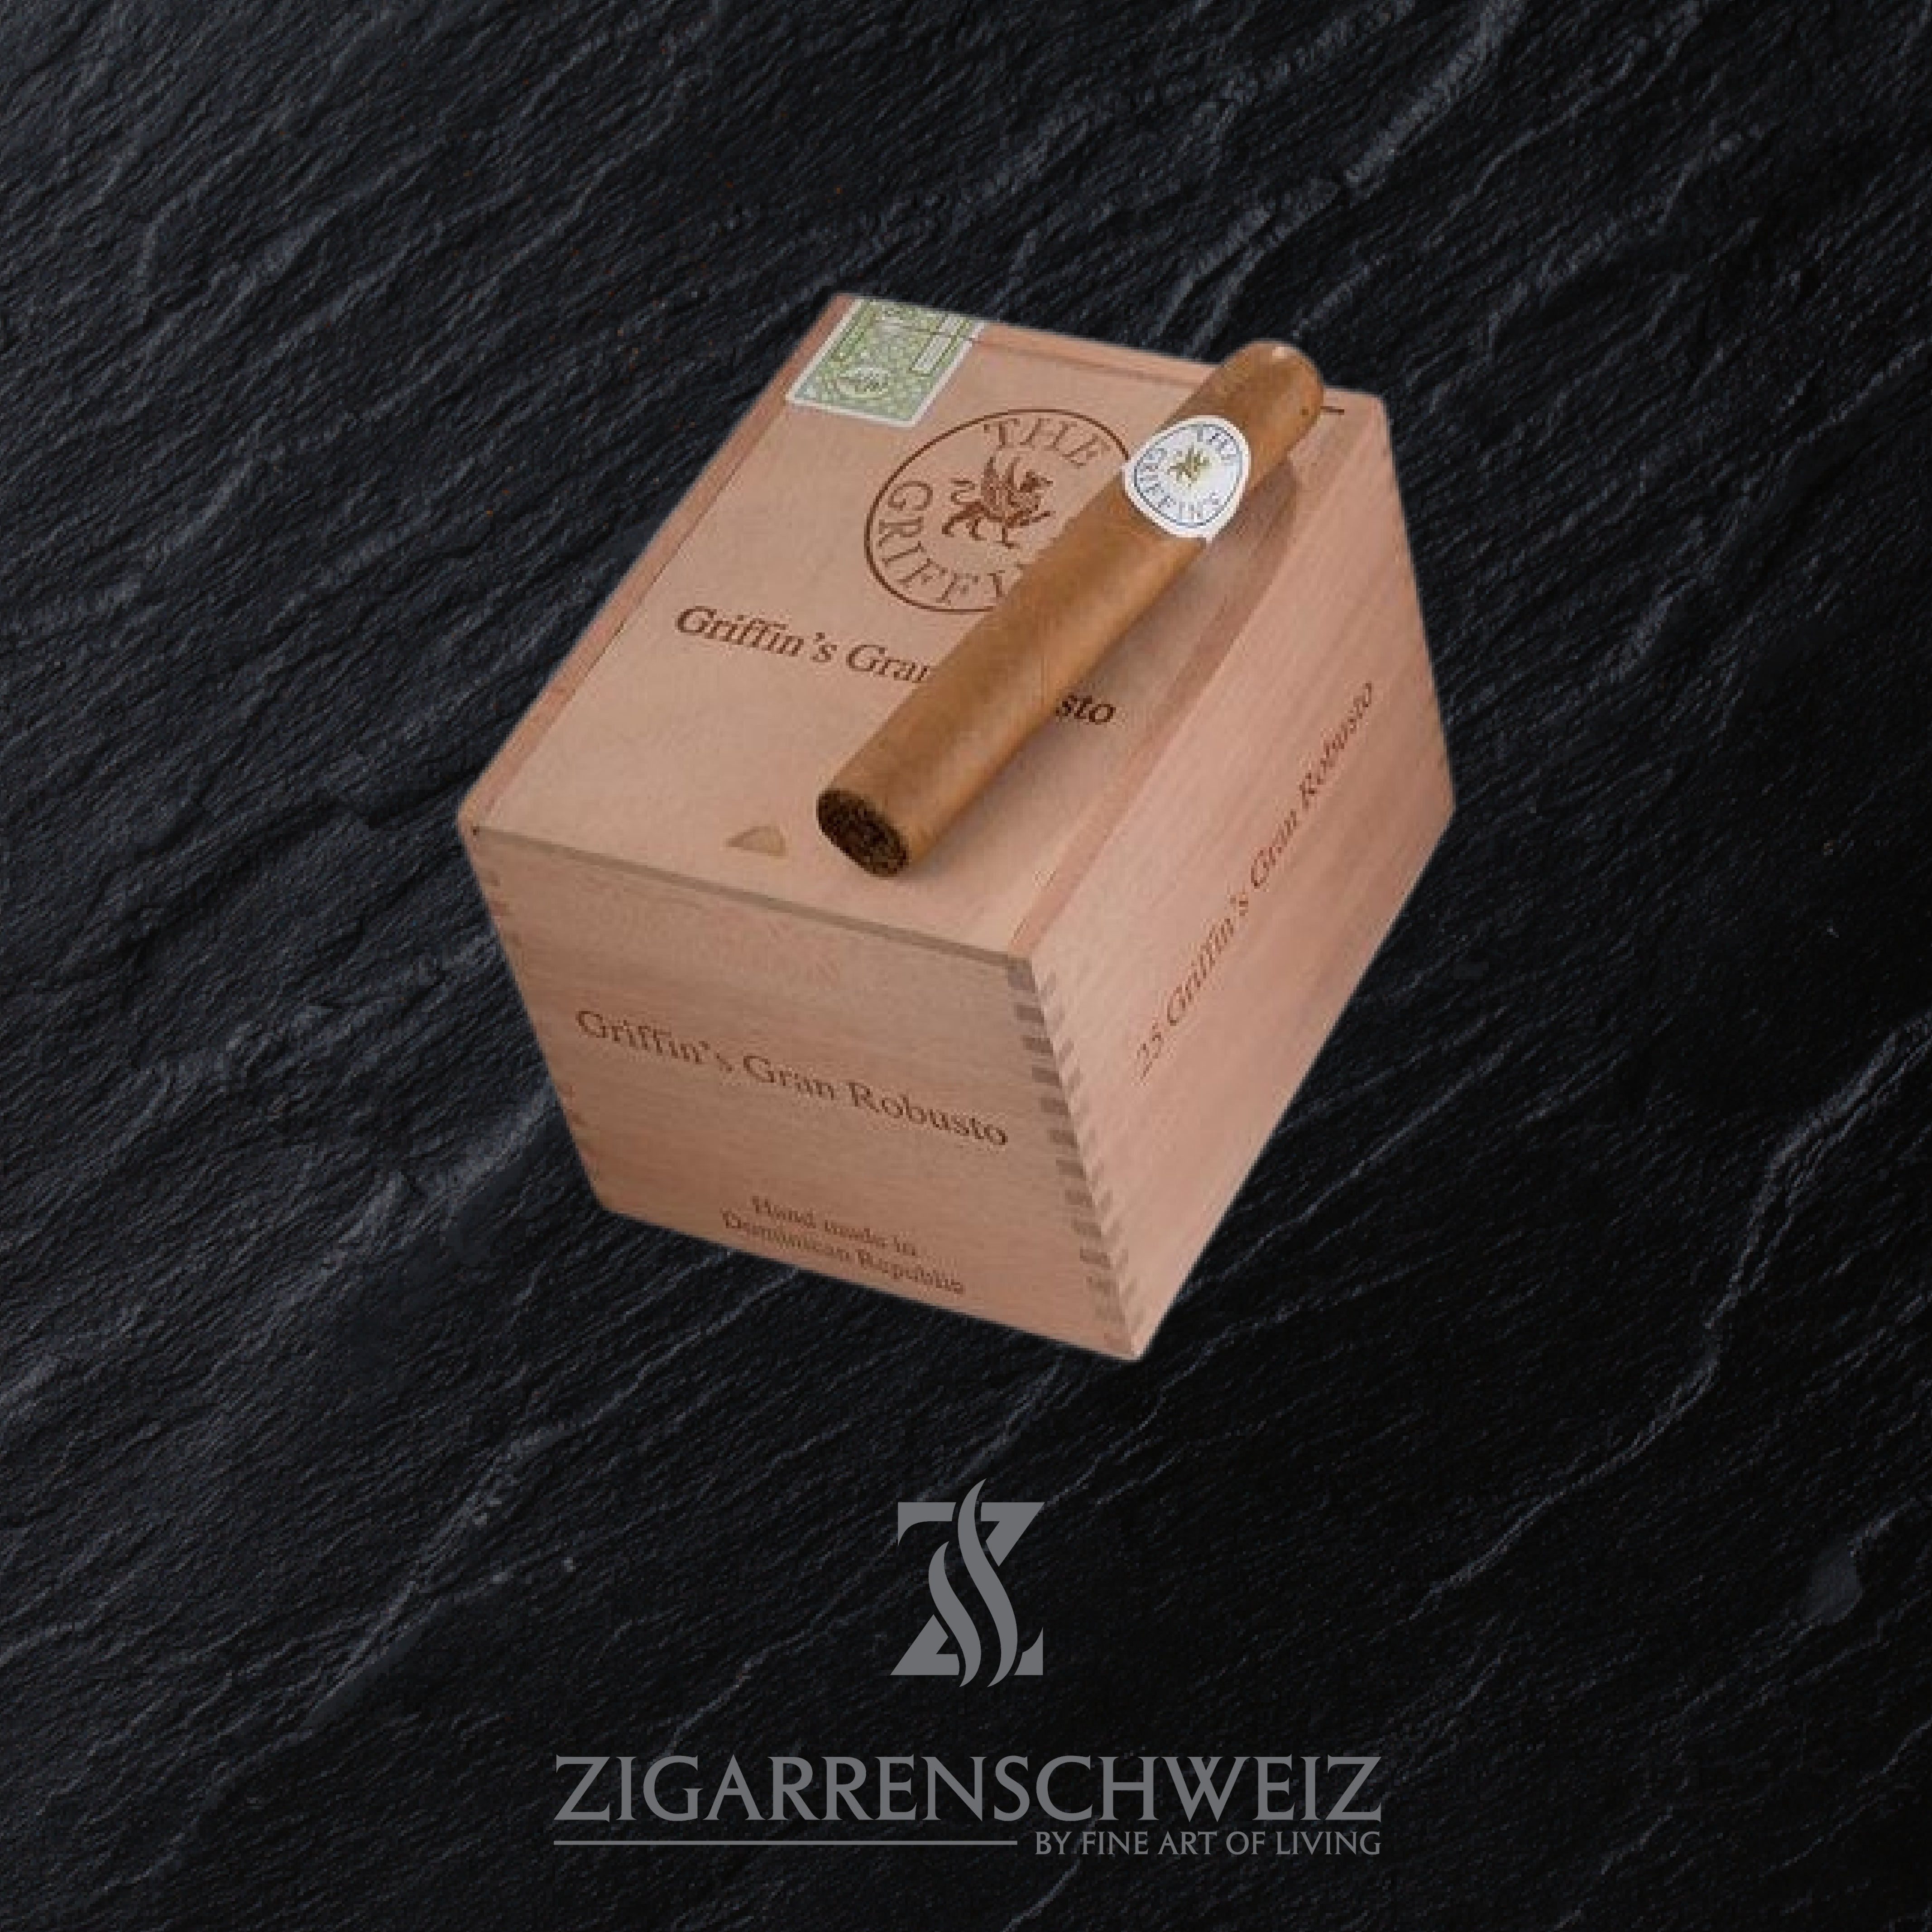 The Griffins Classic Gran Robusto 25er Zigarren Kiste